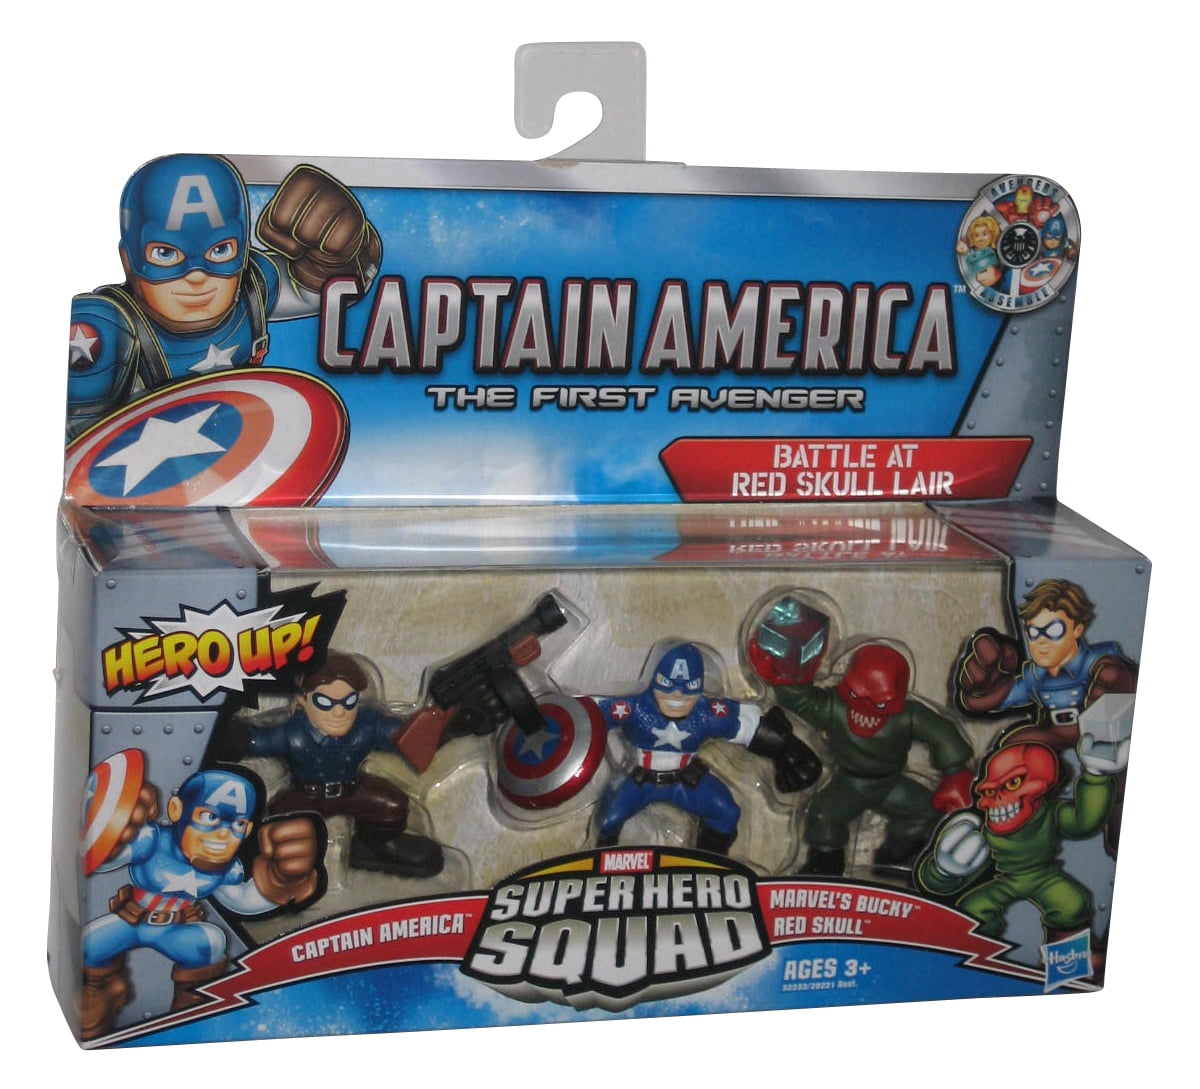 PLAYSKOOL Captain America POWER UP MARVEL SUPER HERO SQUAD ACTION FIGURE TOYS 